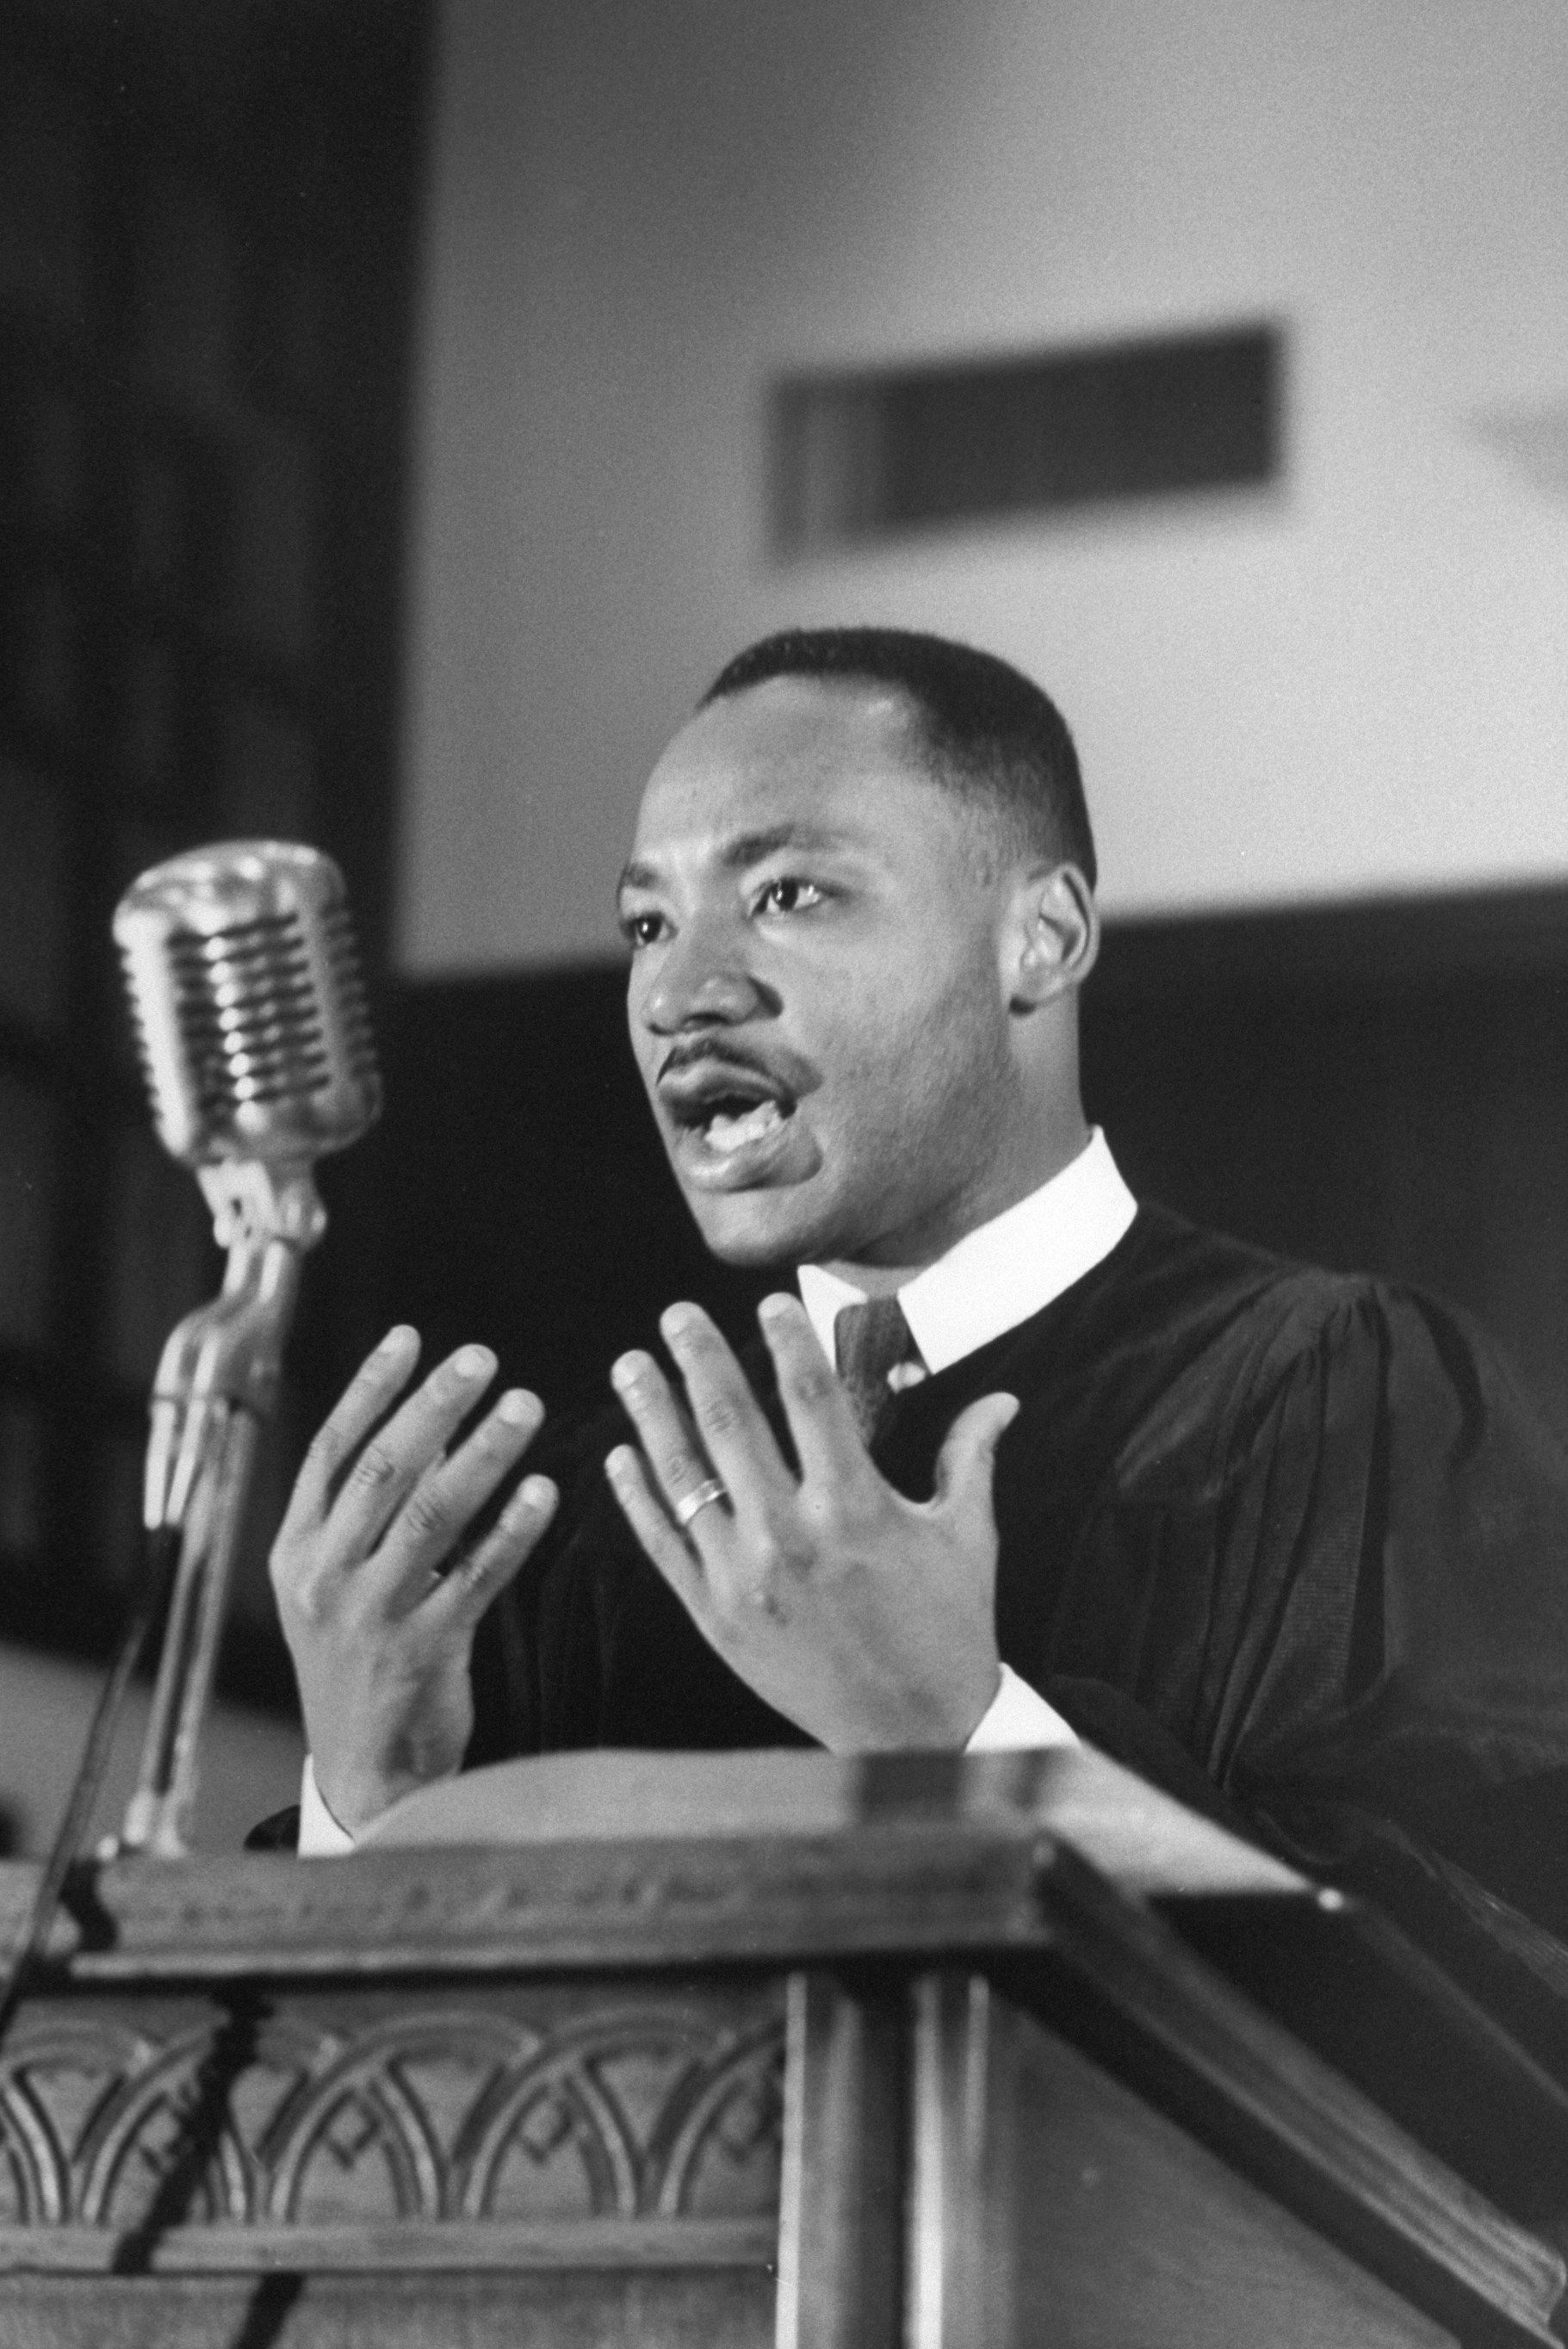 Dr. King preaching